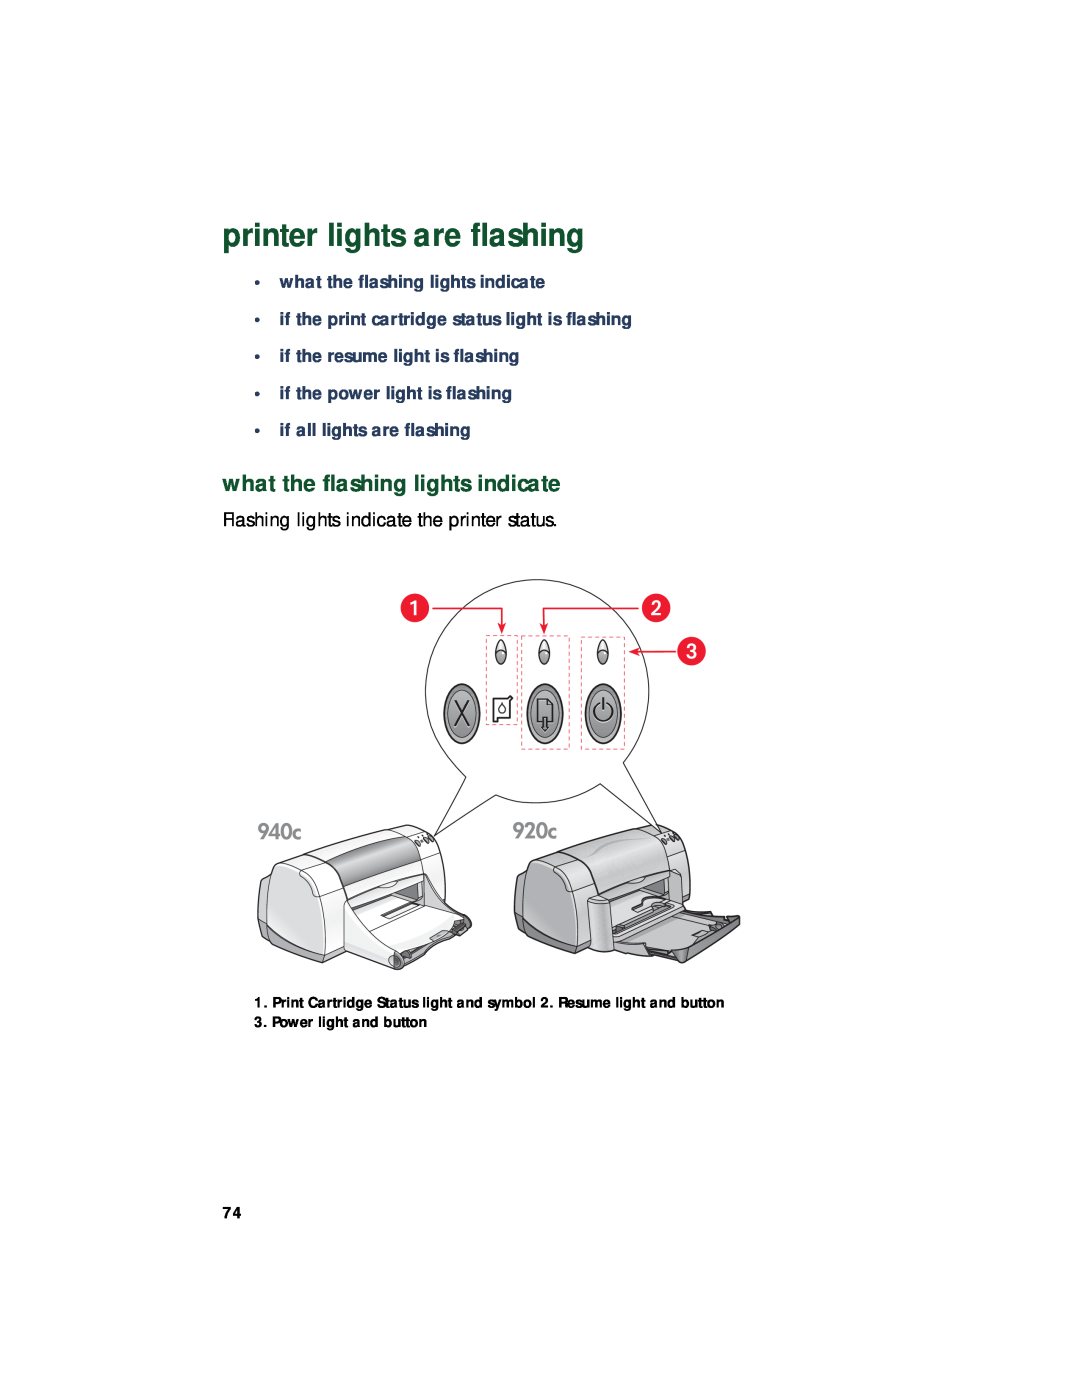 HP 948c printer lights are flashing, what the flashing lights indicate, if the print cartridge status light is flashing 